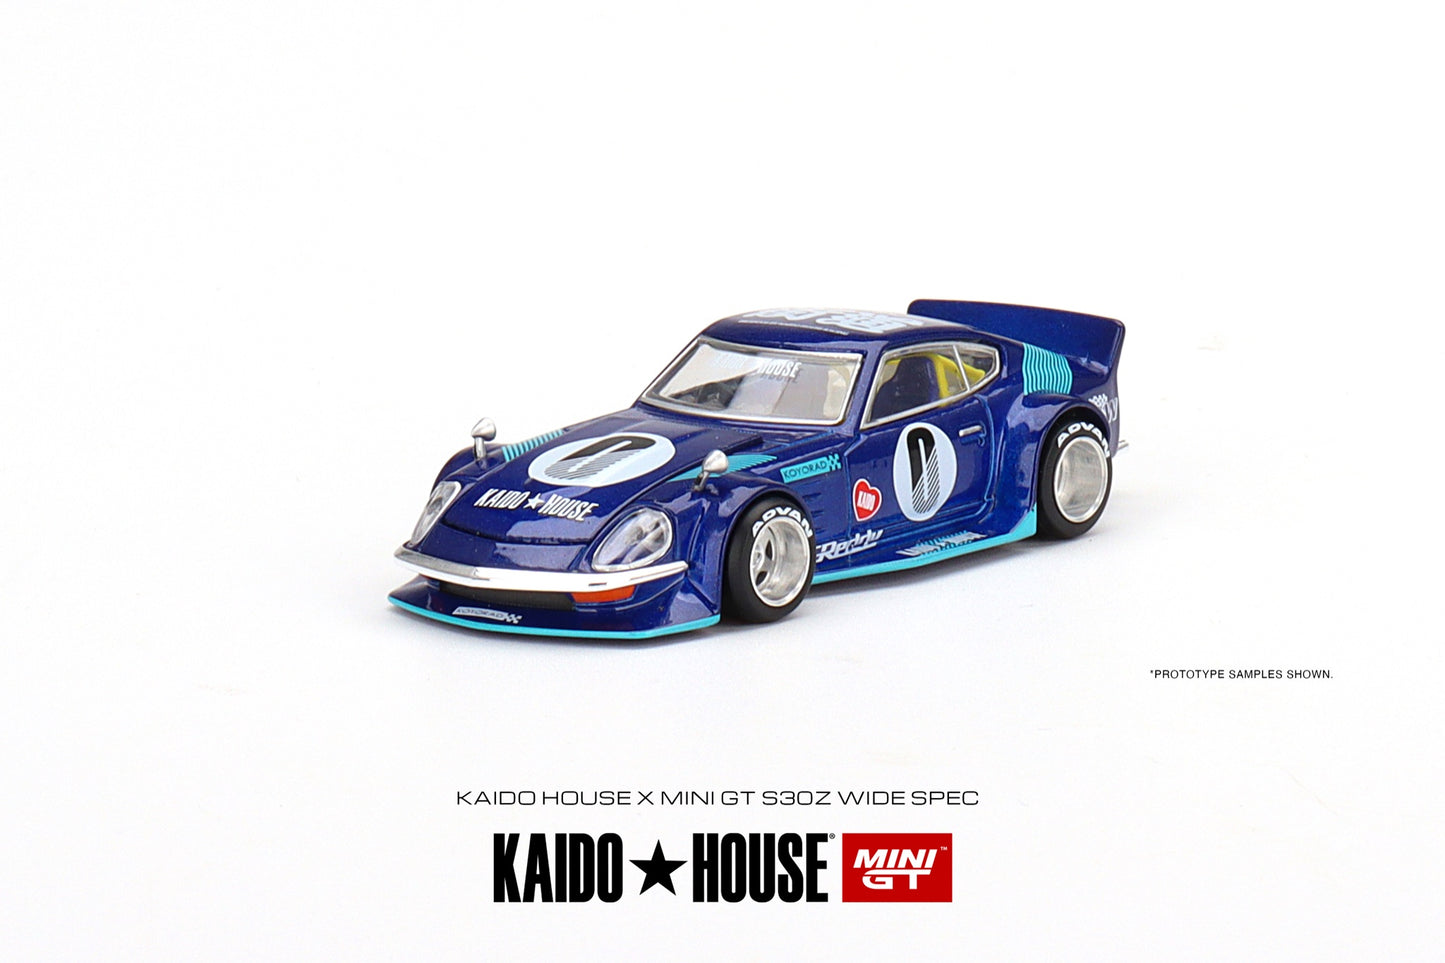 Mini GT x Kaido House Datsun S30Z Widespec in Blue